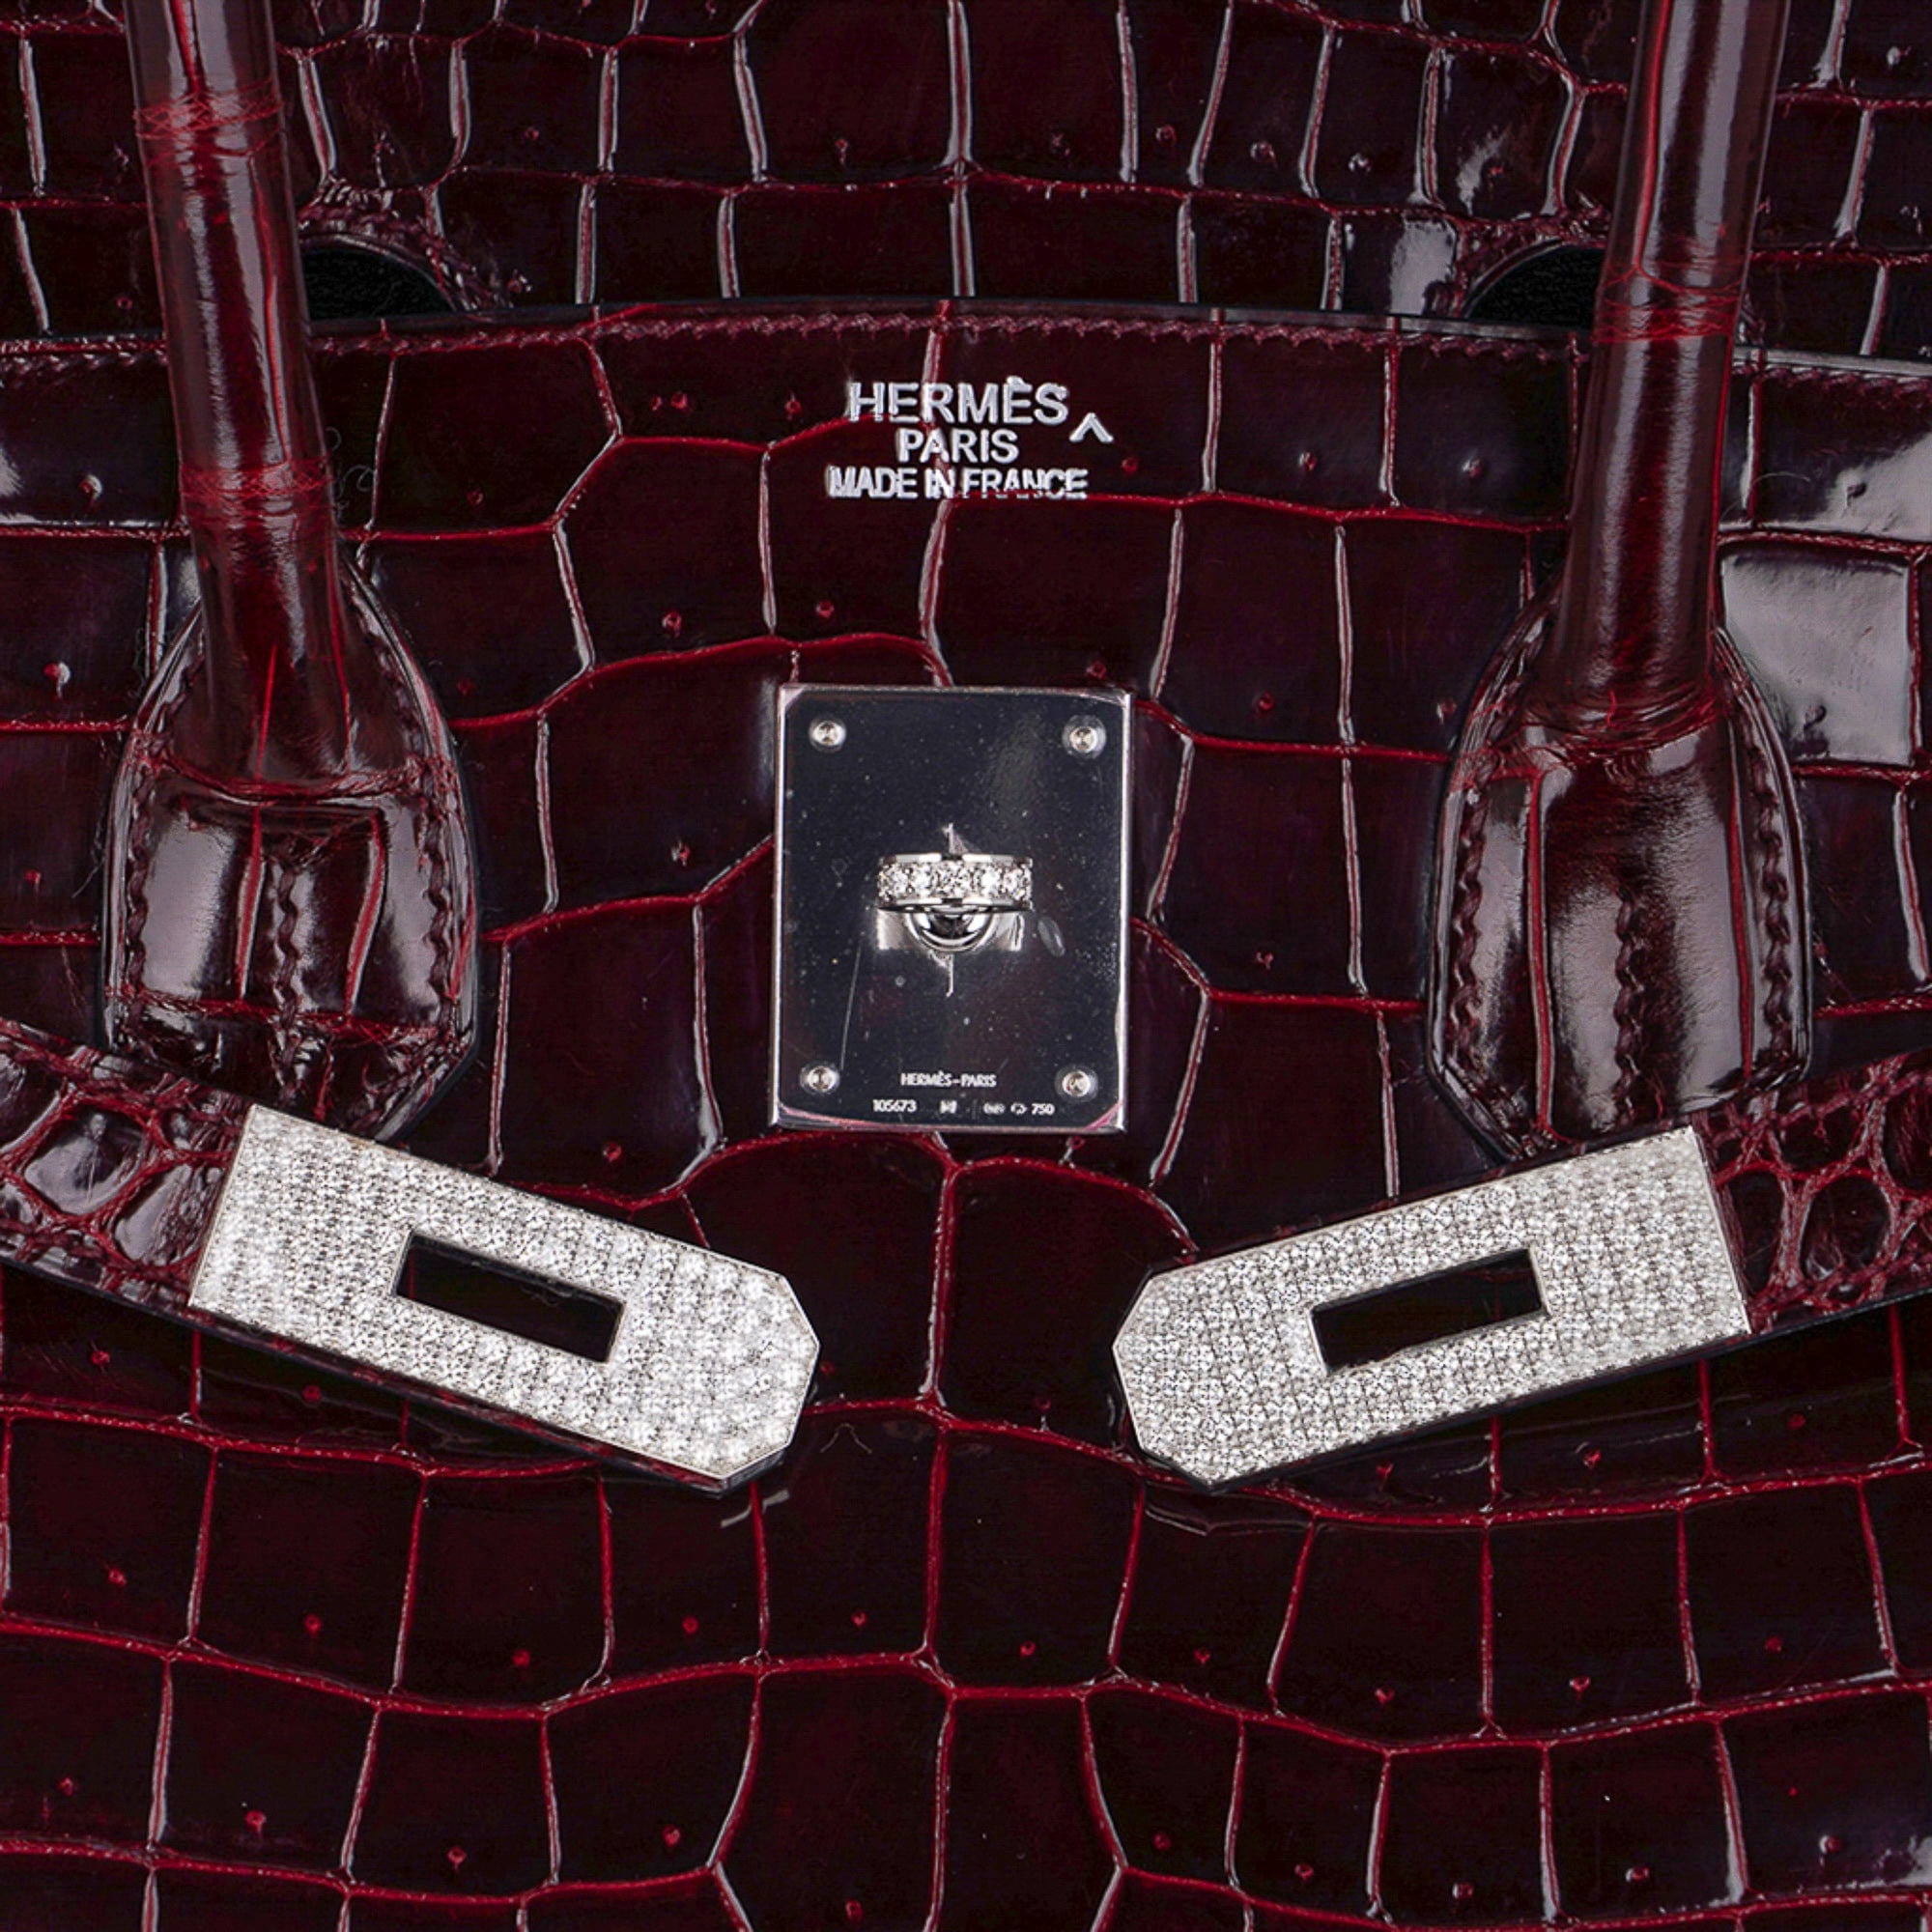 Hermes Birkin 30 Crocodile Bag with diamonds